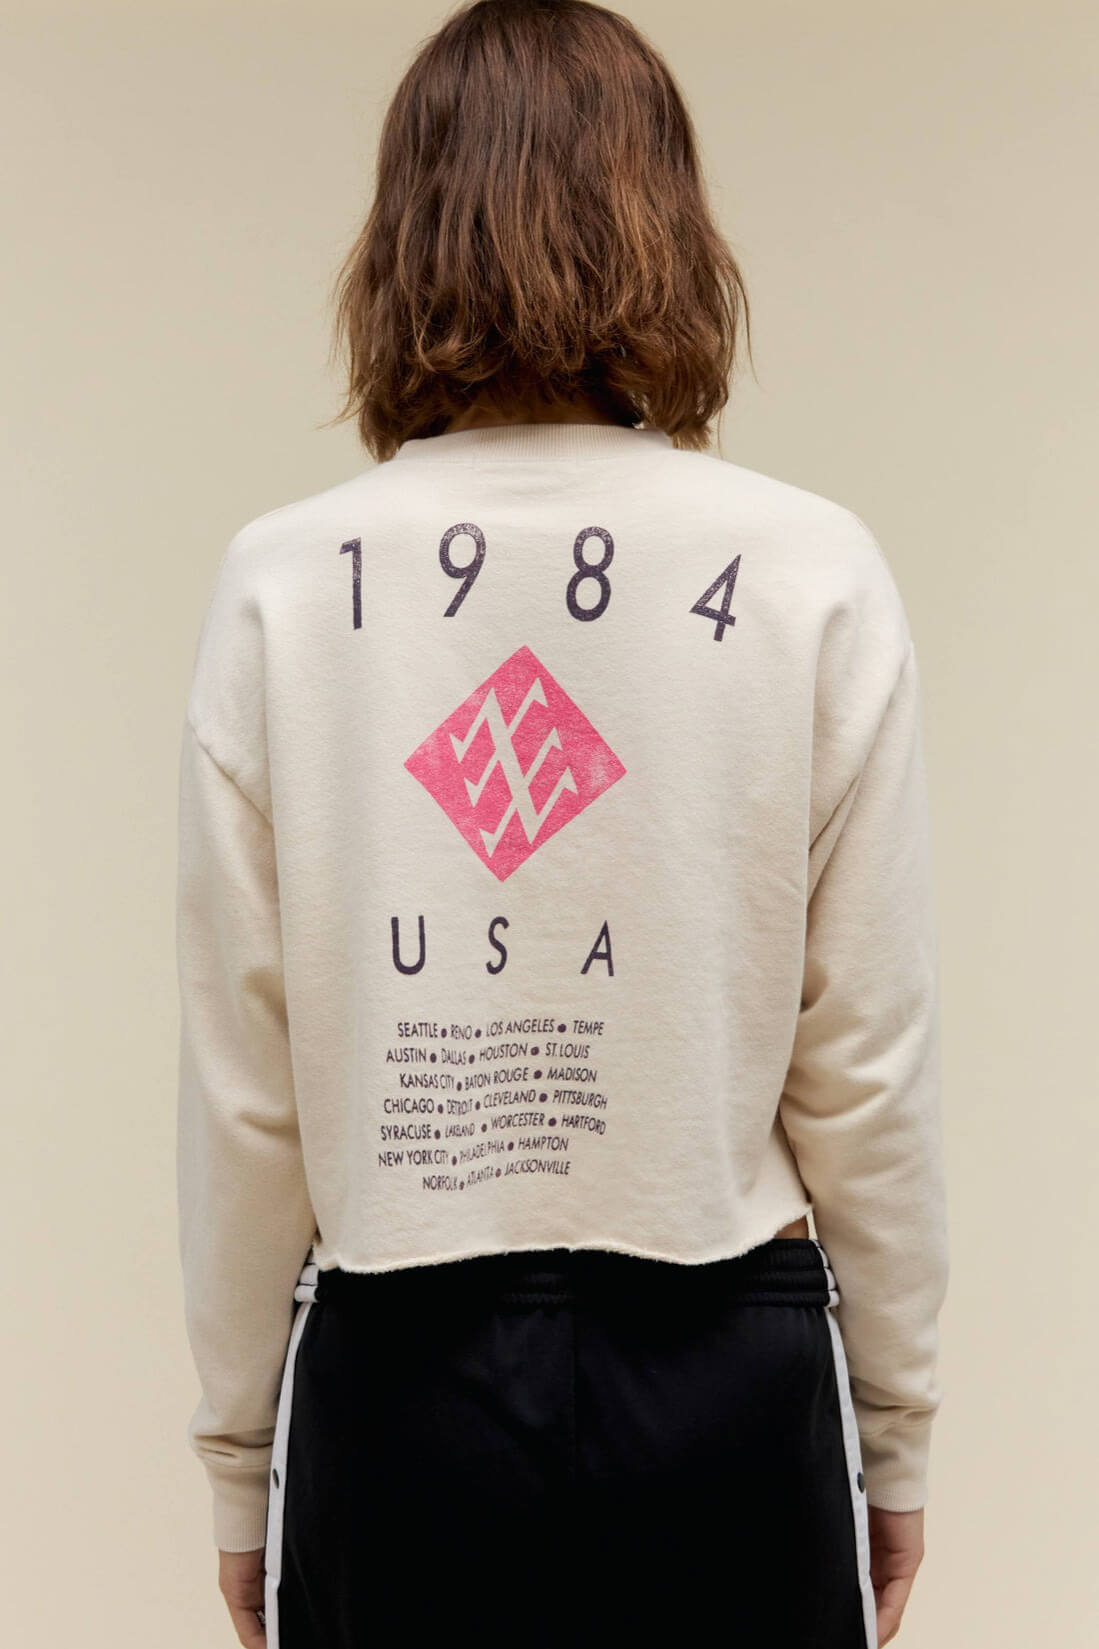 Daydreamer Duran Duran USA Tour 1984 Sweatshirt 